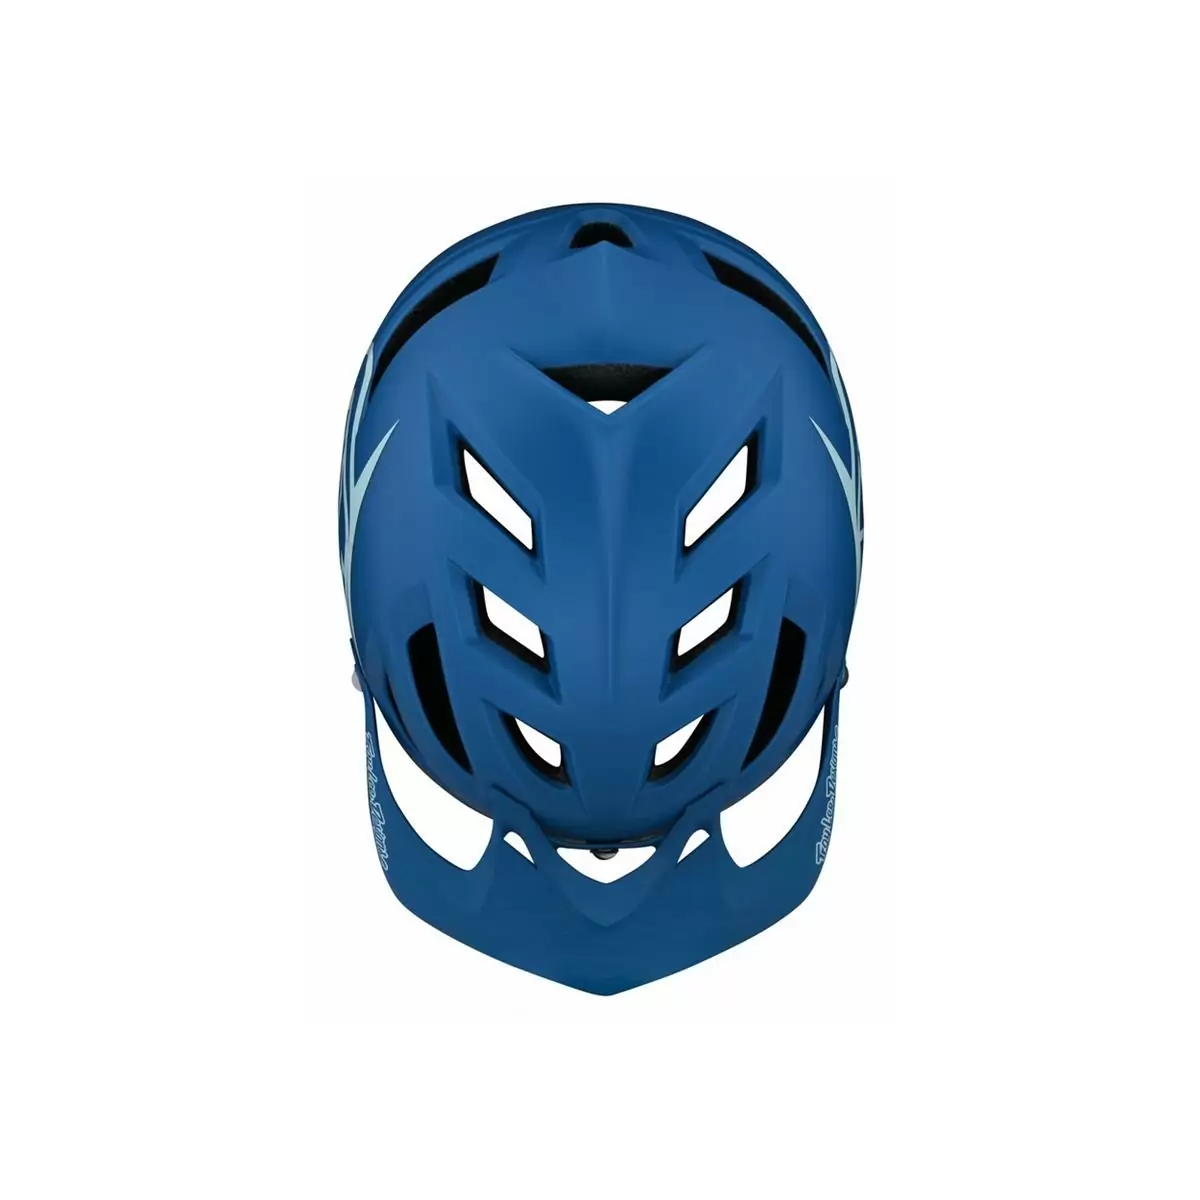 Enduro MTB Helmet A3 Drone Light Slate Blue Size M/L (57-59cm) #1